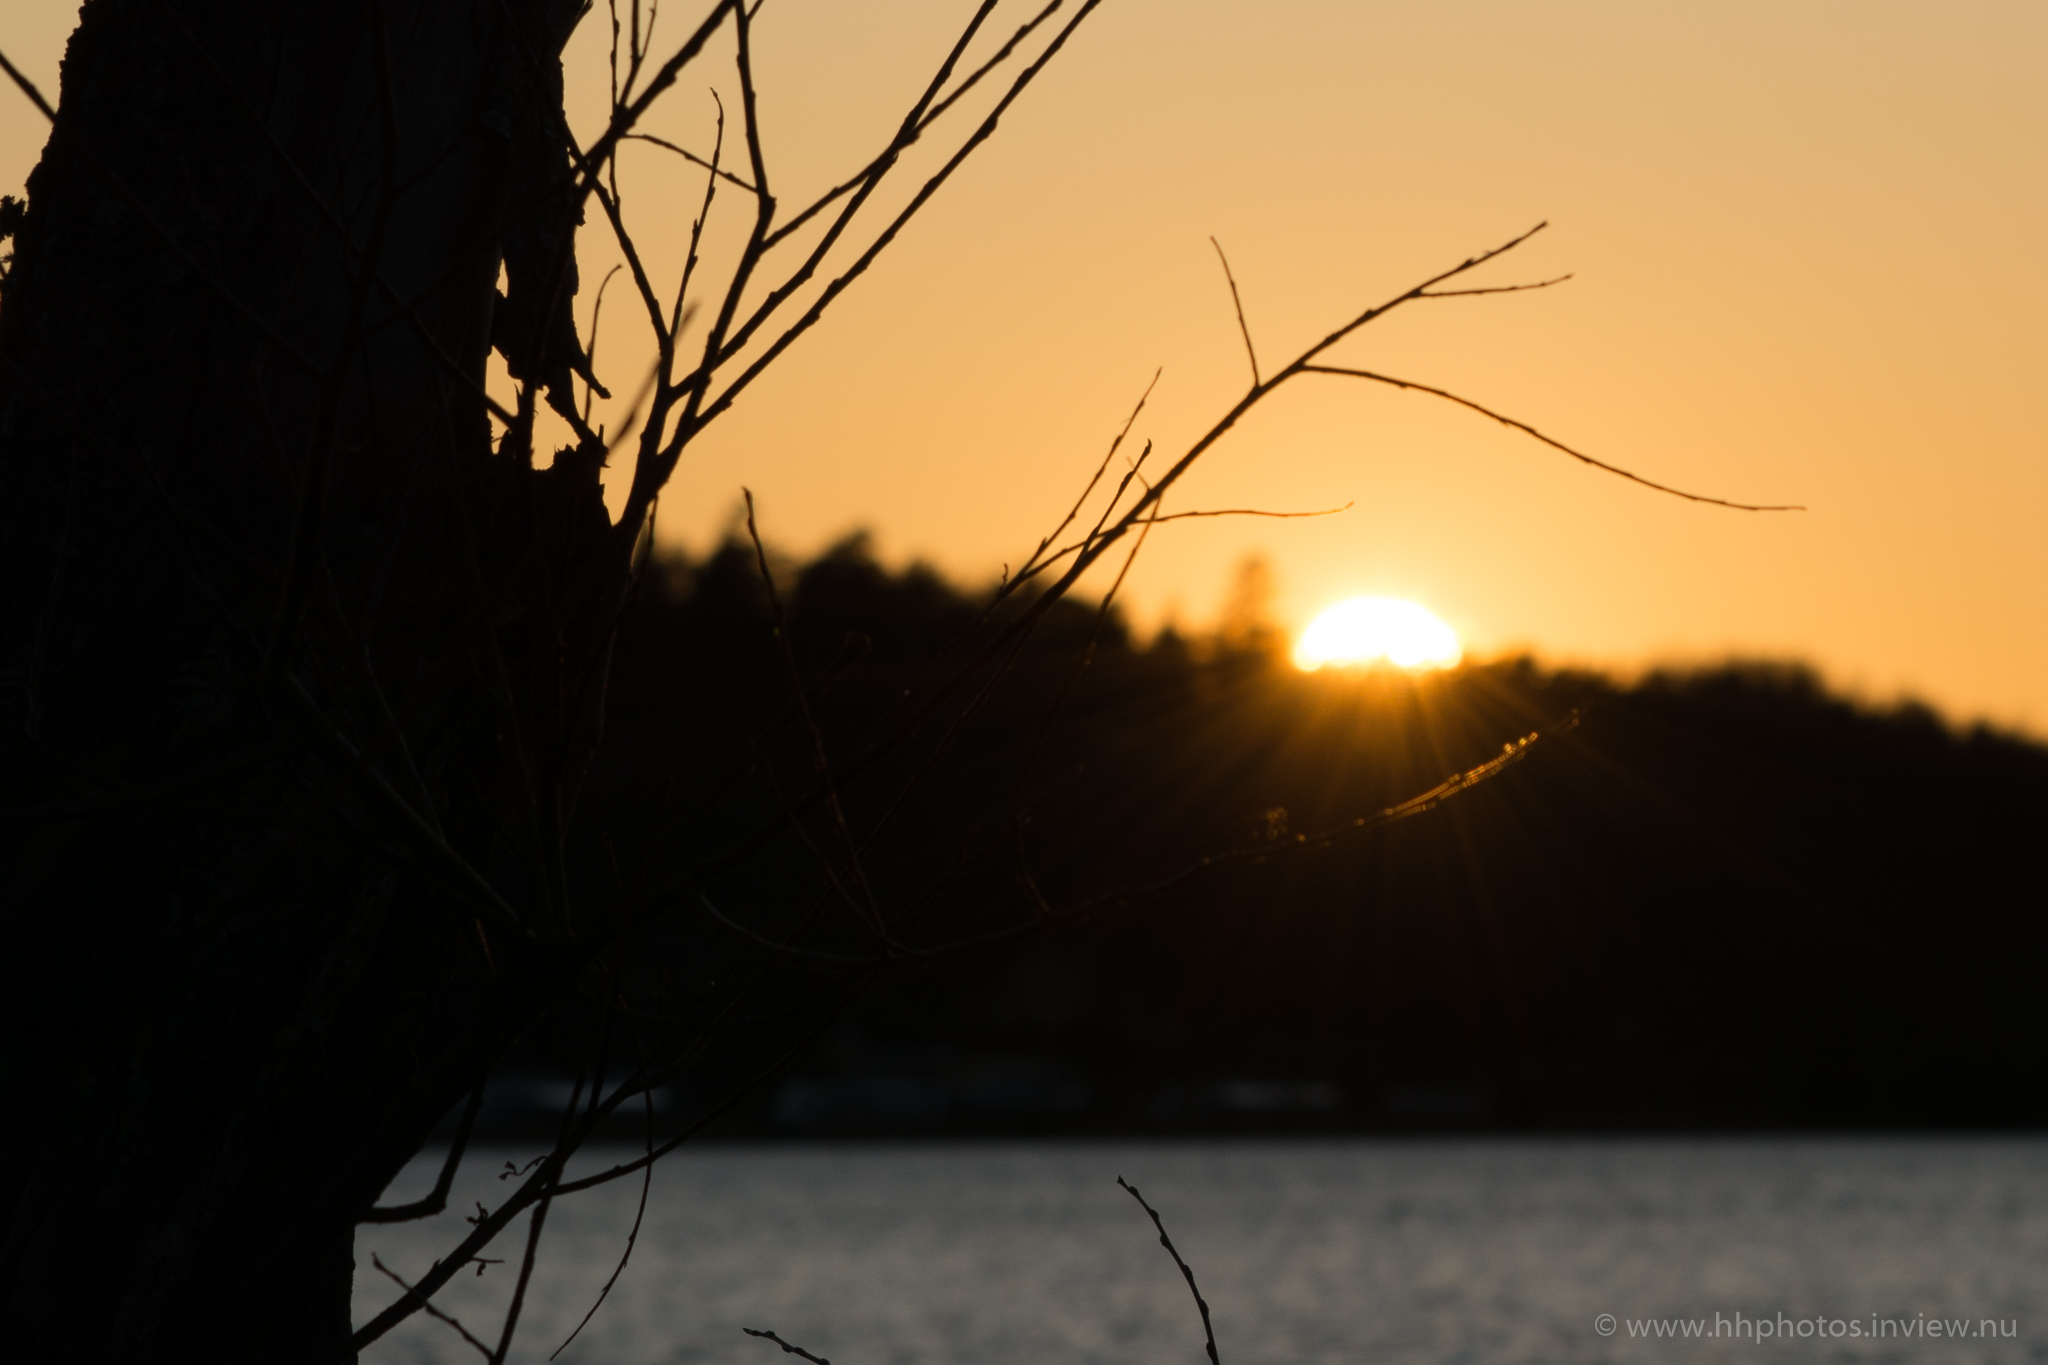 Solnedgång över Mjörn / Sunset by Lake Mjörn